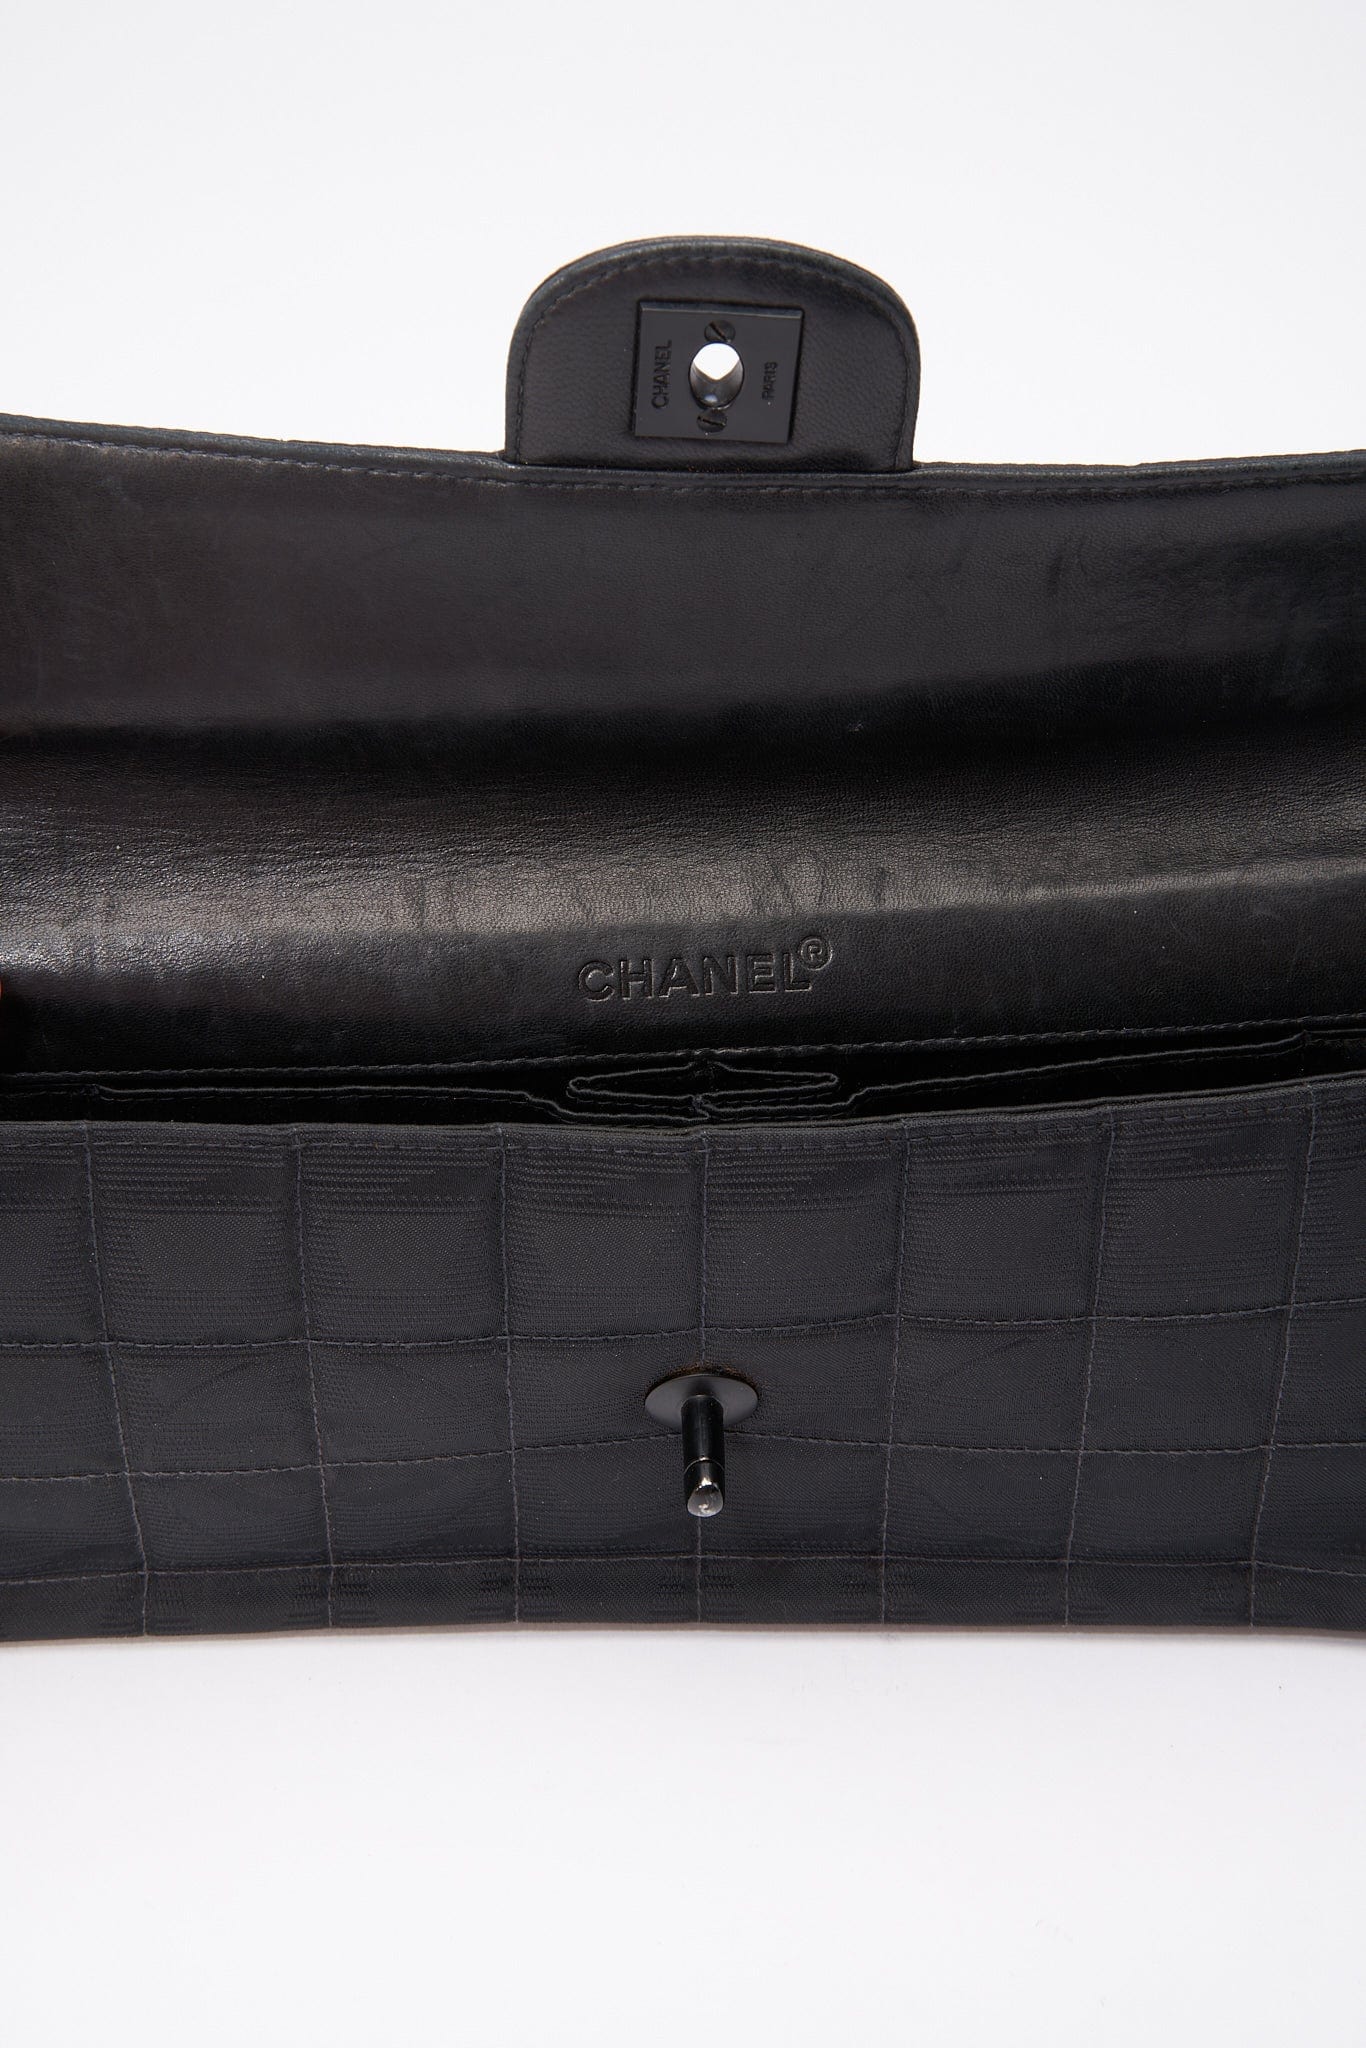 Chanel Black Nylon Travel Line Chocolate Bar Flap Bag